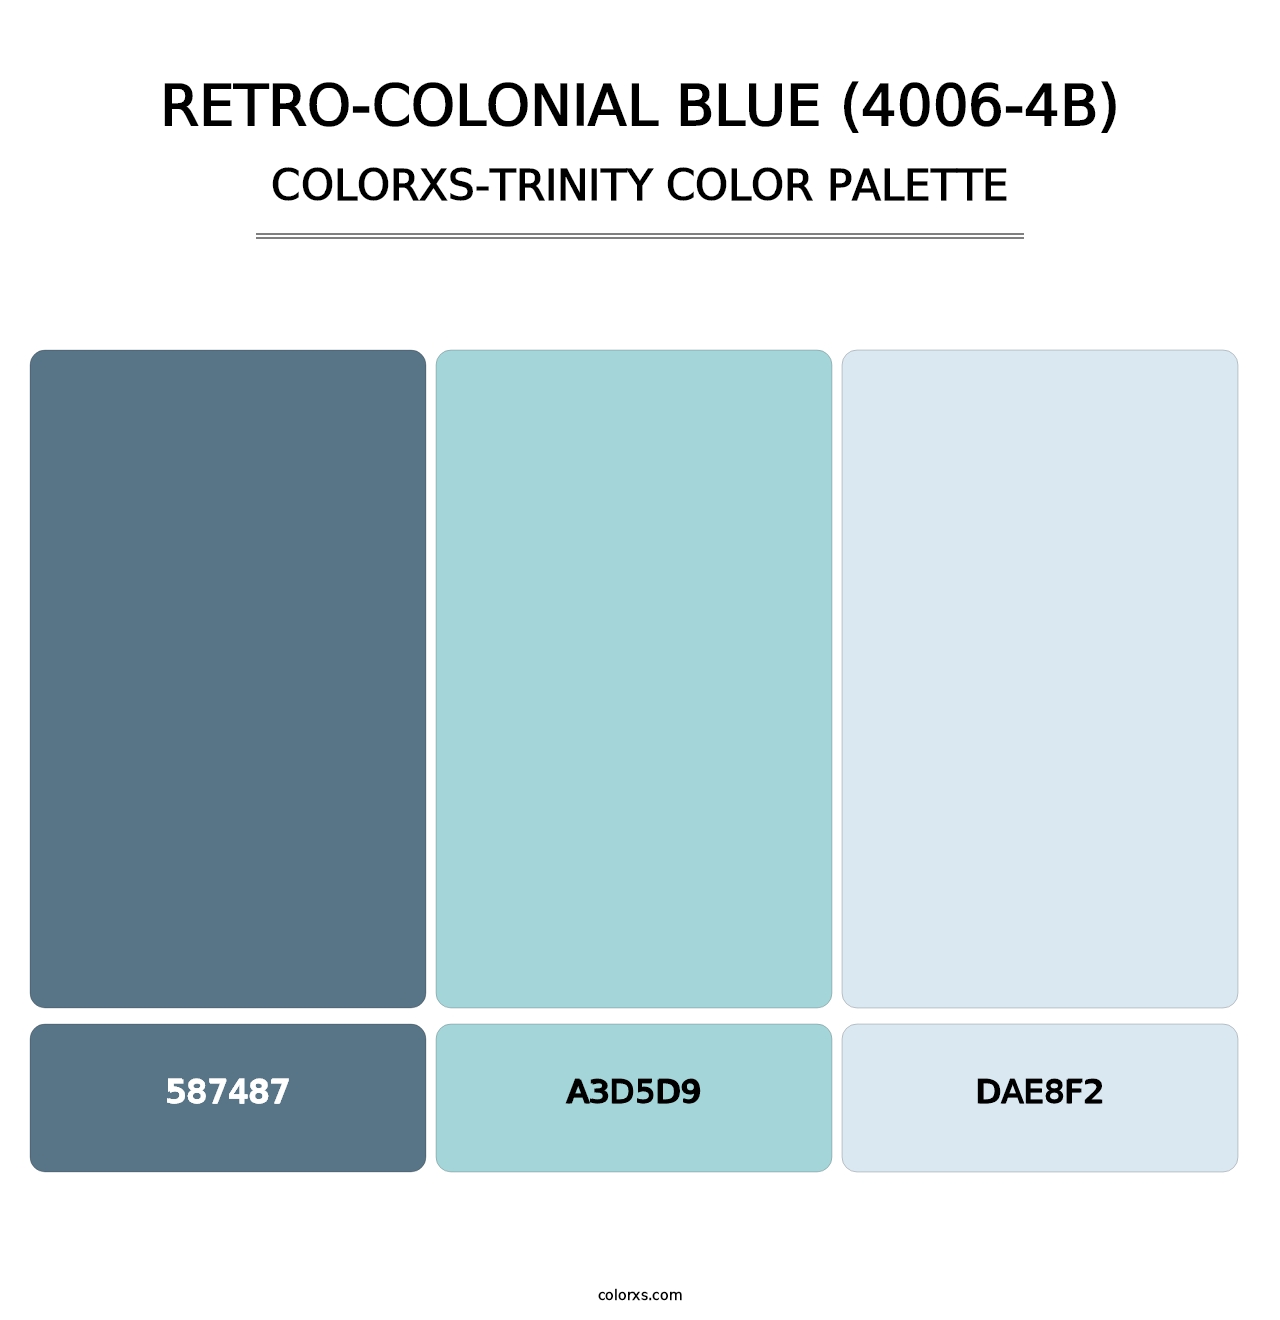 Retro-Colonial Blue (4006-4B) - Colorxs Trinity Palette